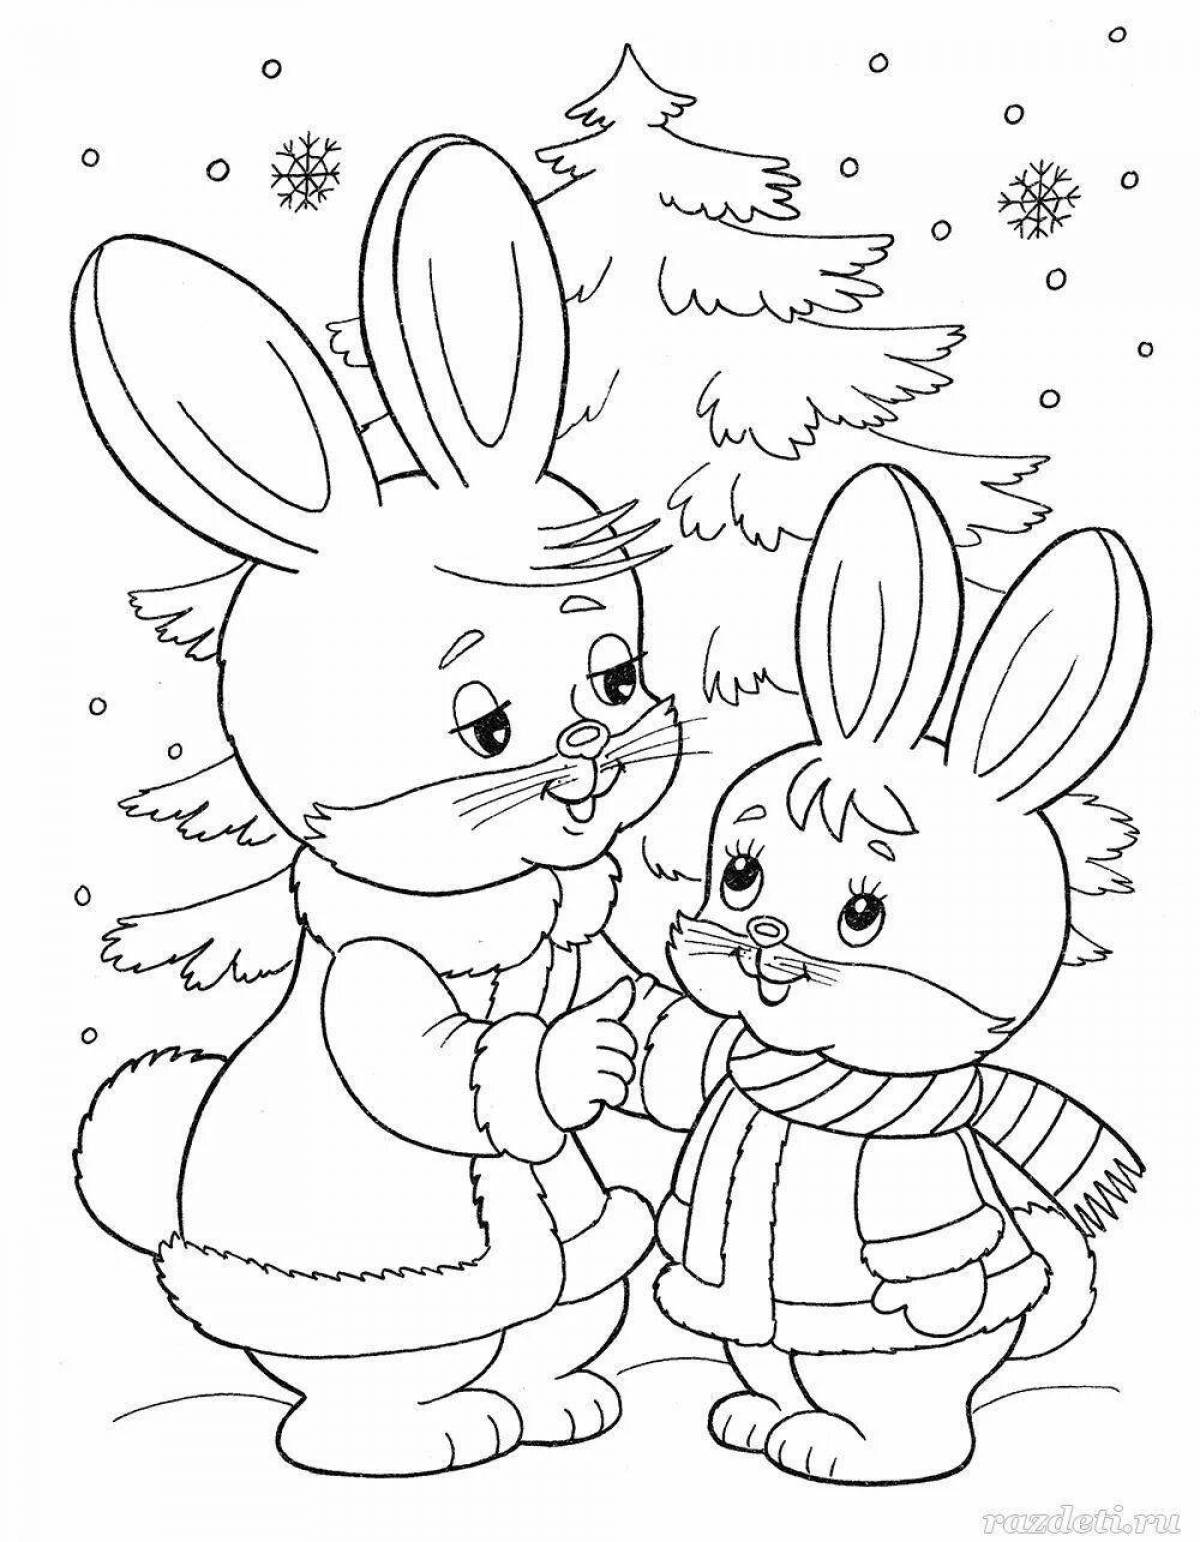 Children's happy winter coloring book